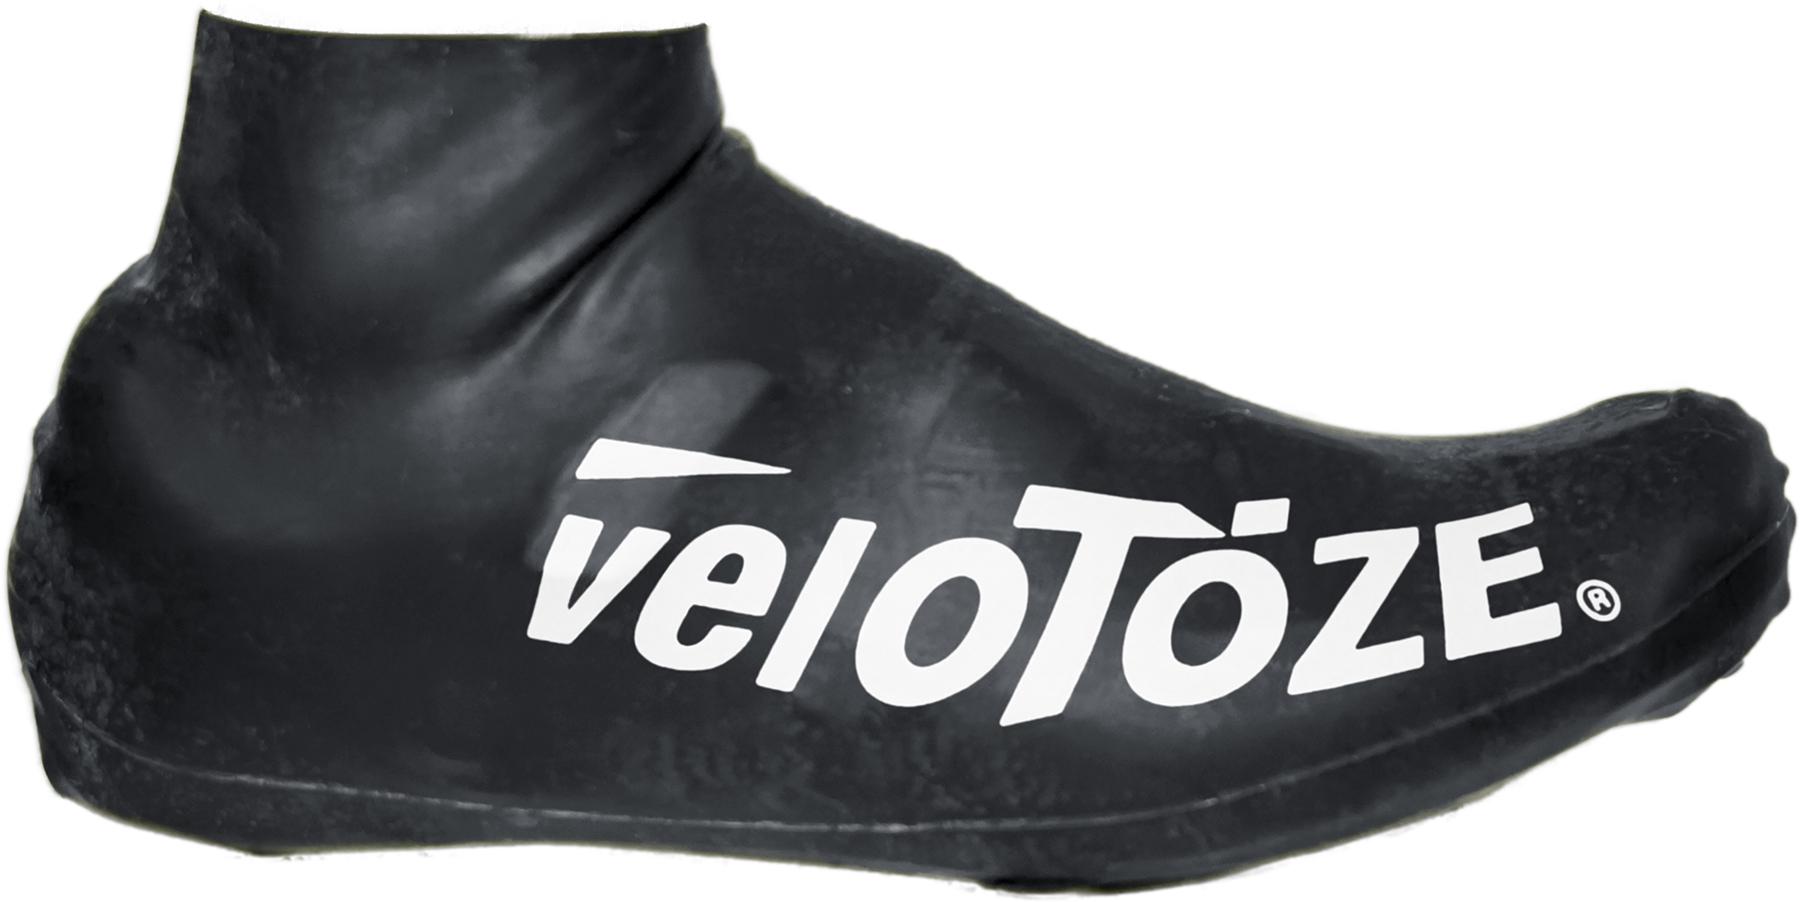 Velotoze Short Overshoes 2.0  Black